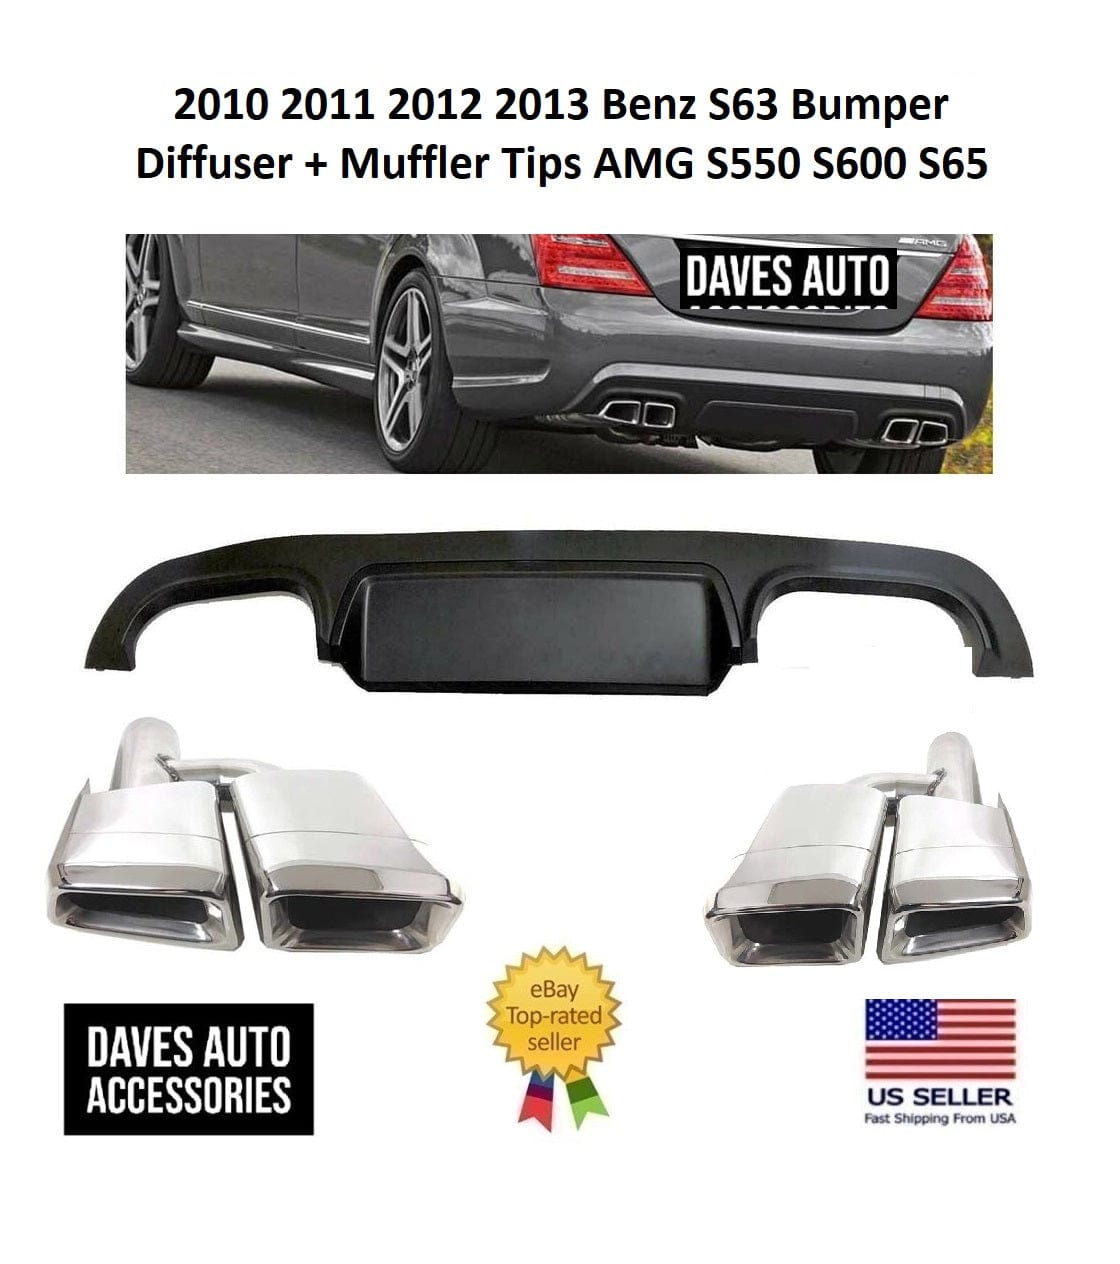 2010 2011 2012 2013 Benz S63 Bumper Diffuser + Muffler Tips AMG S550 S600 S65